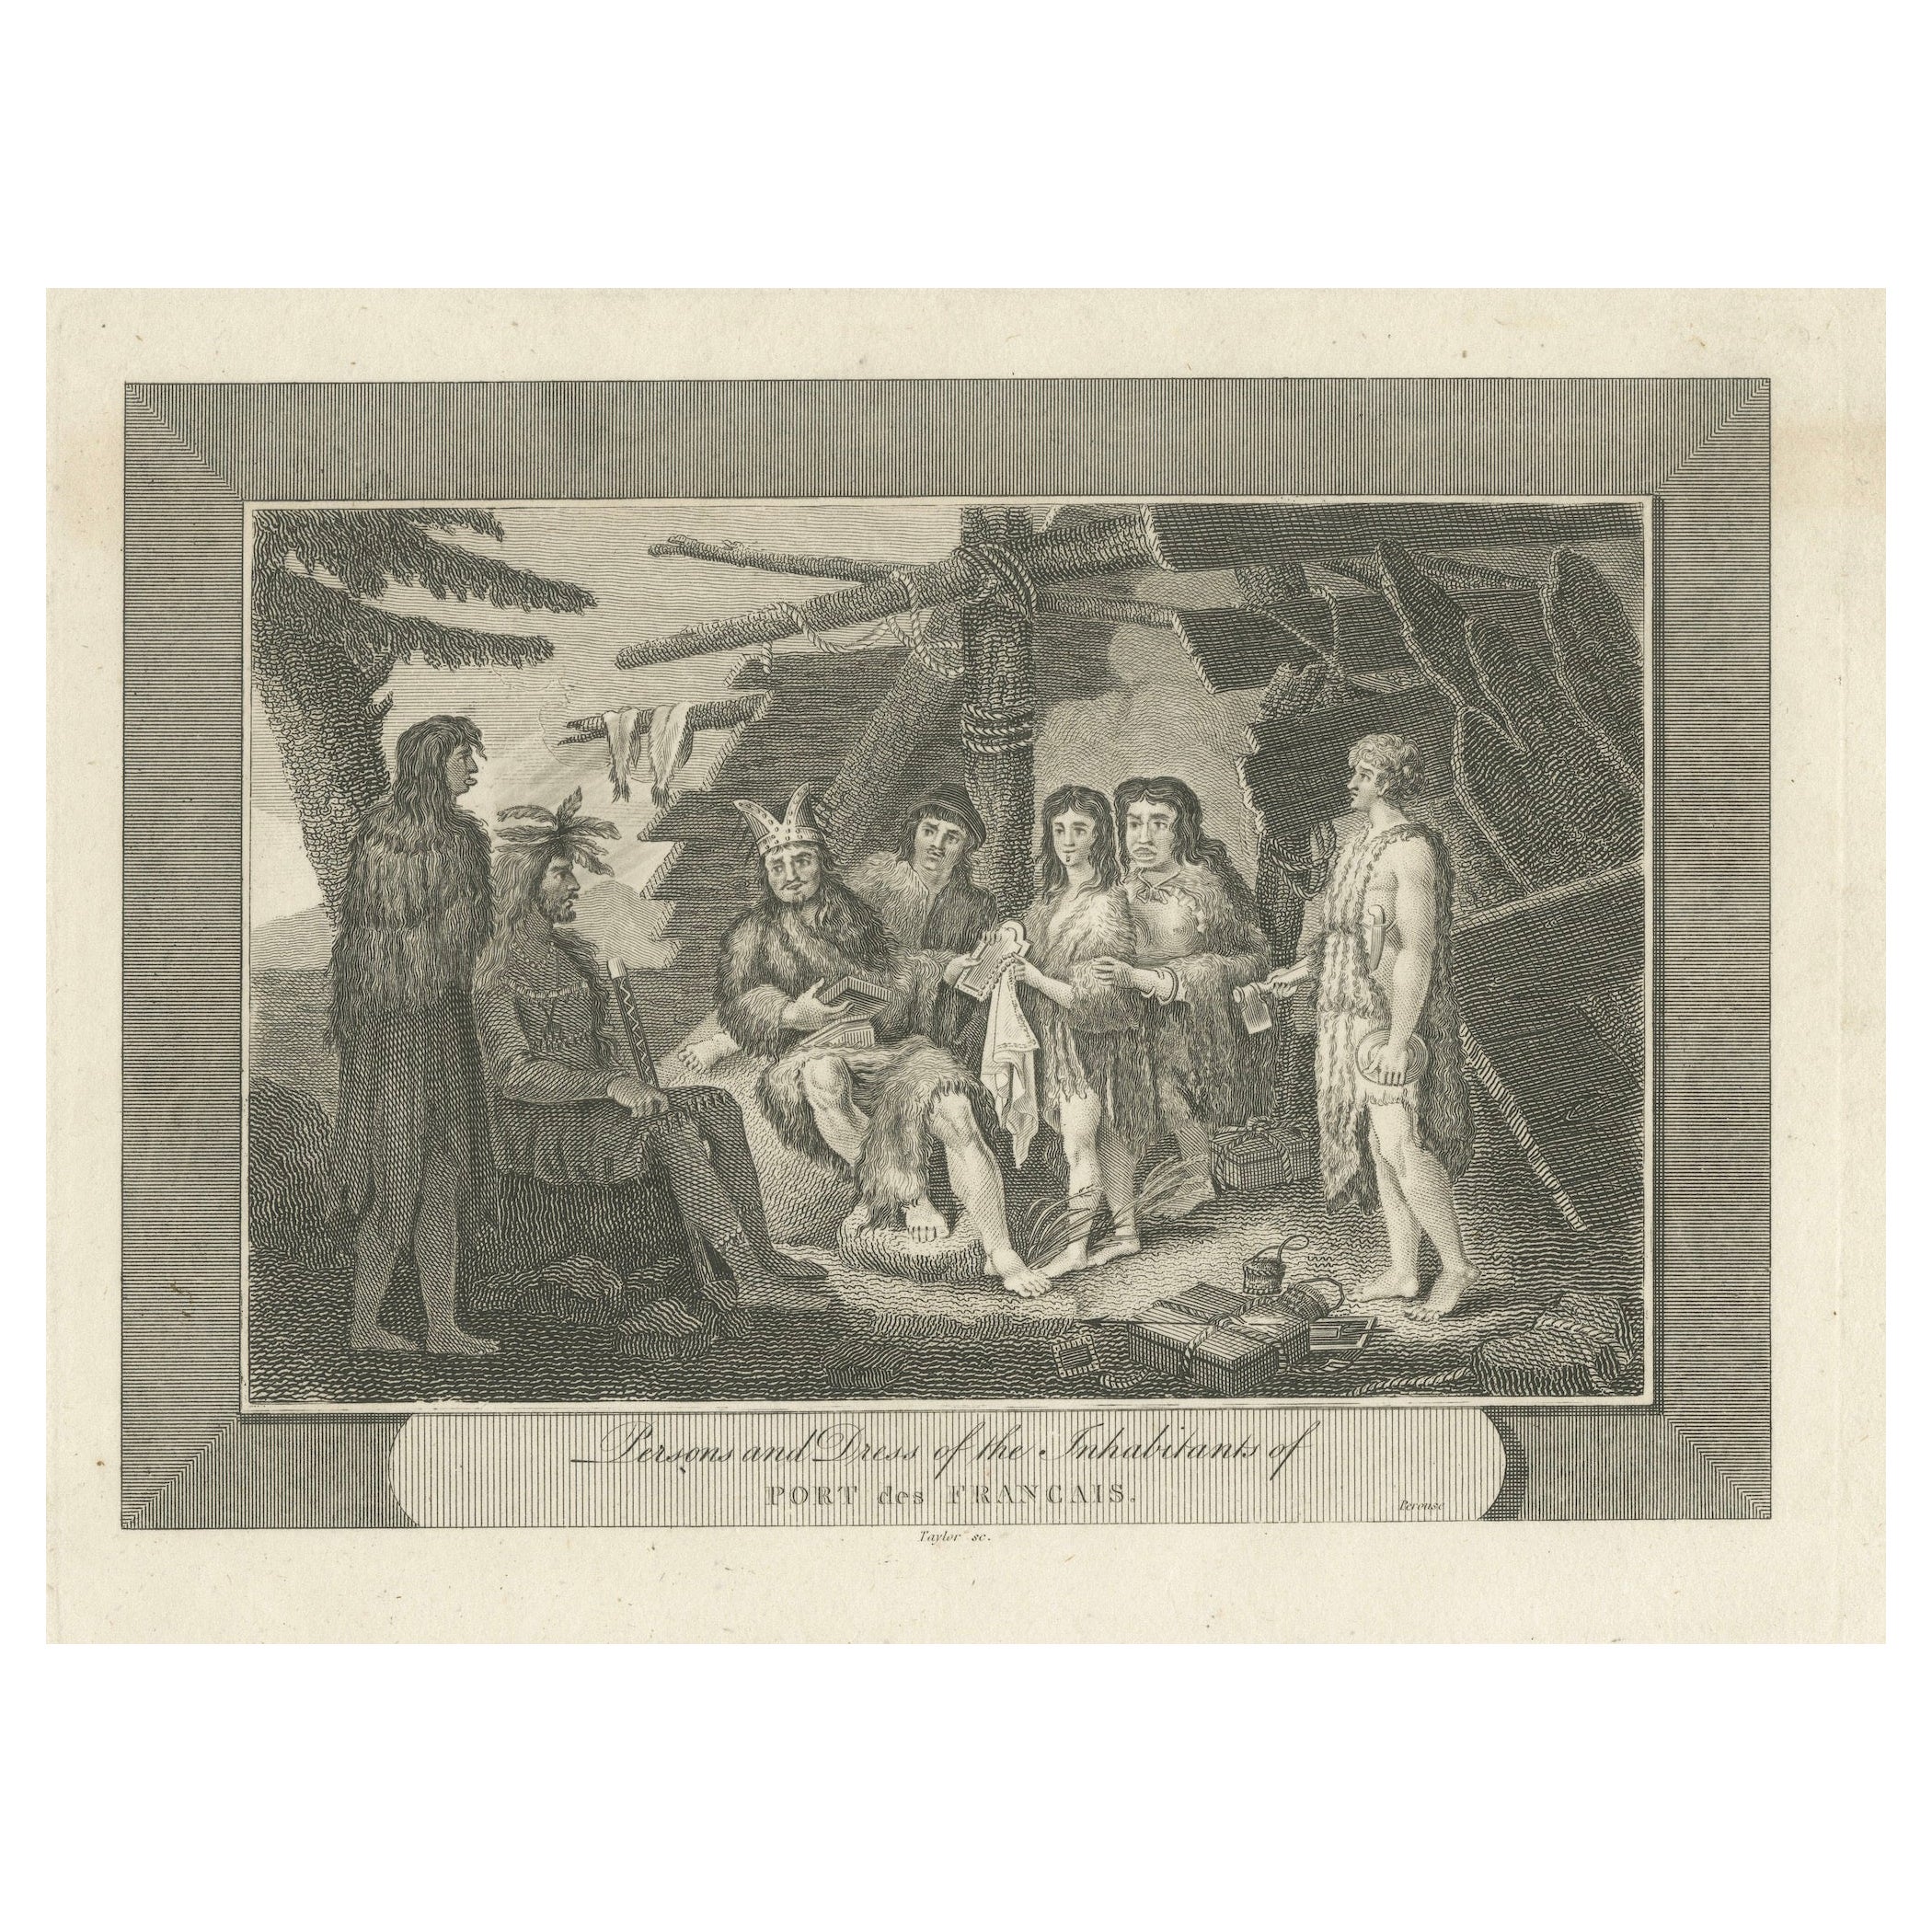 Encounter at Lituya Bay: French Explorers Among the Tlingit, 1786